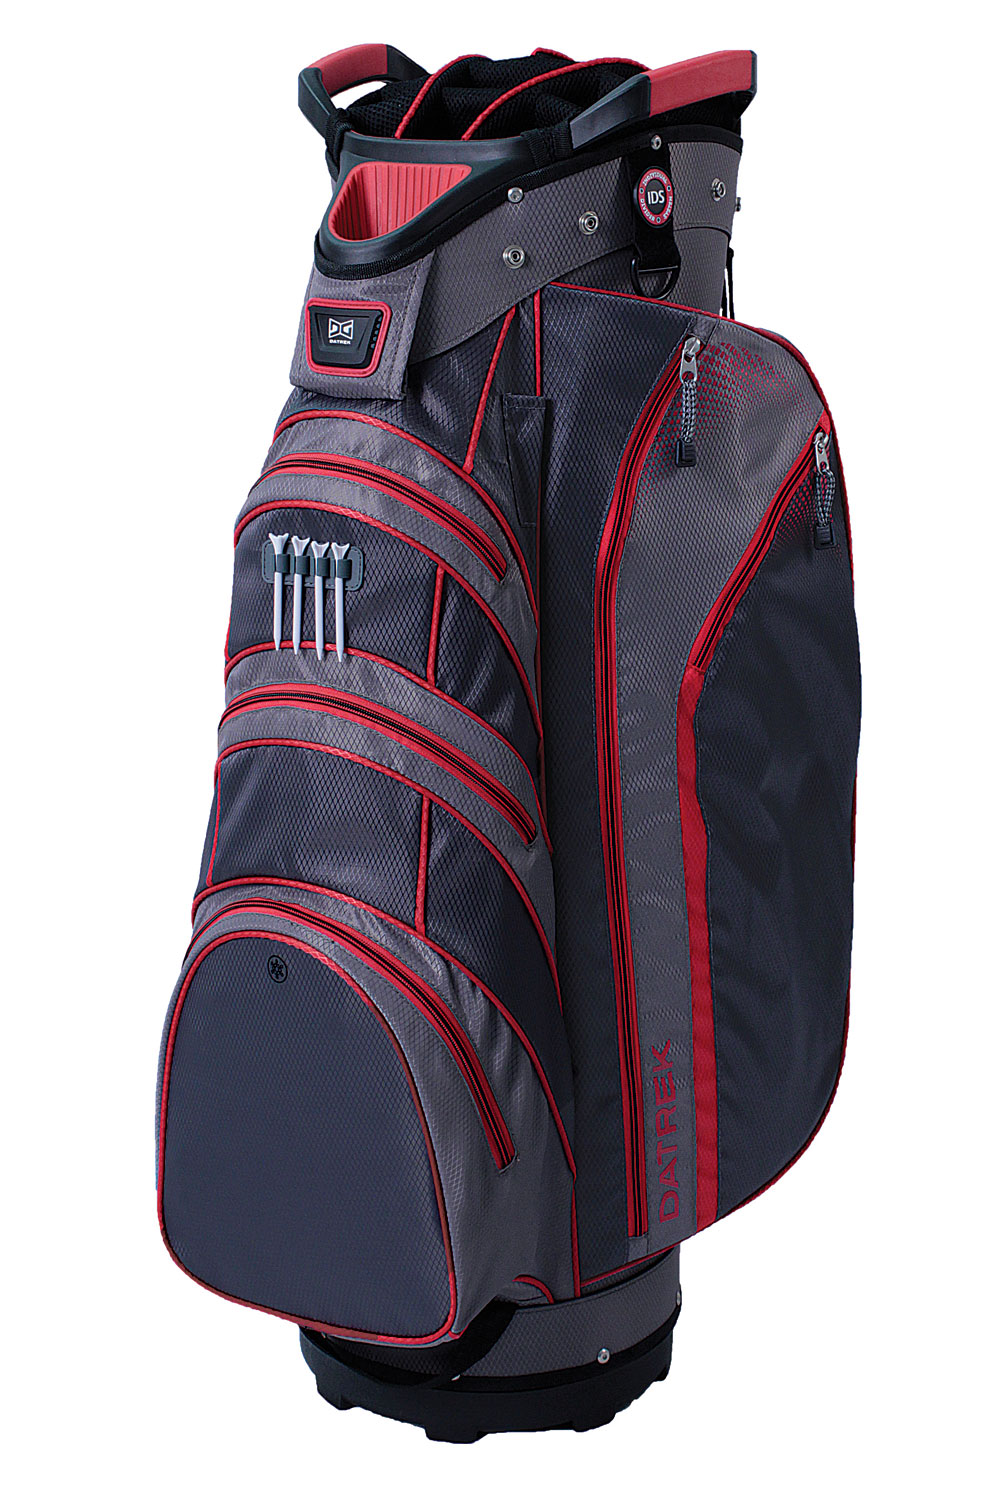 Datrek Lite Rider Golf Cart Bag (Various Colors) - NEW | eBay